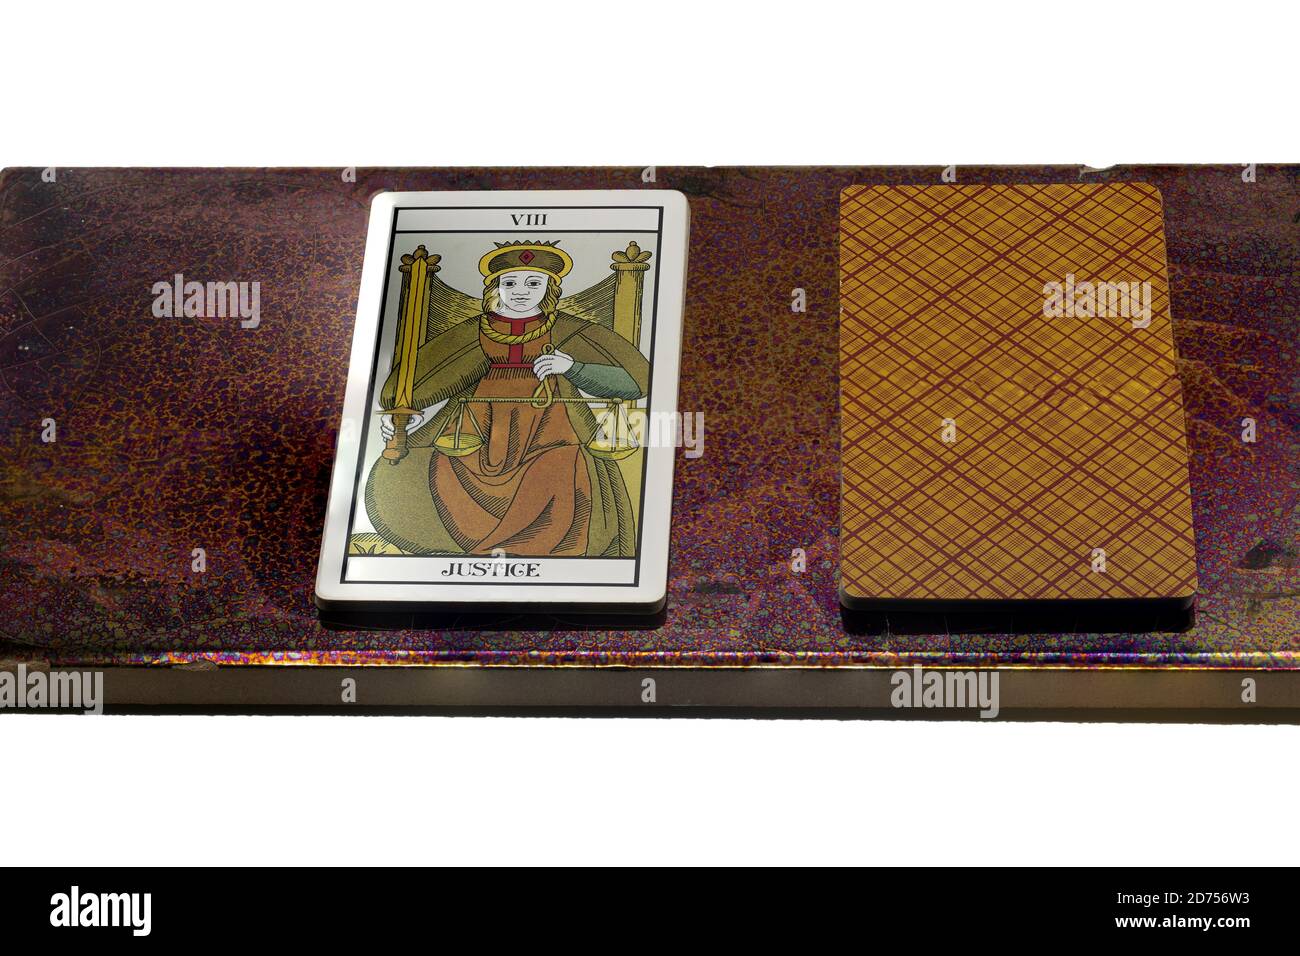 Tarot card - Justice, symbolizing balance and equilibrium Stock Photo